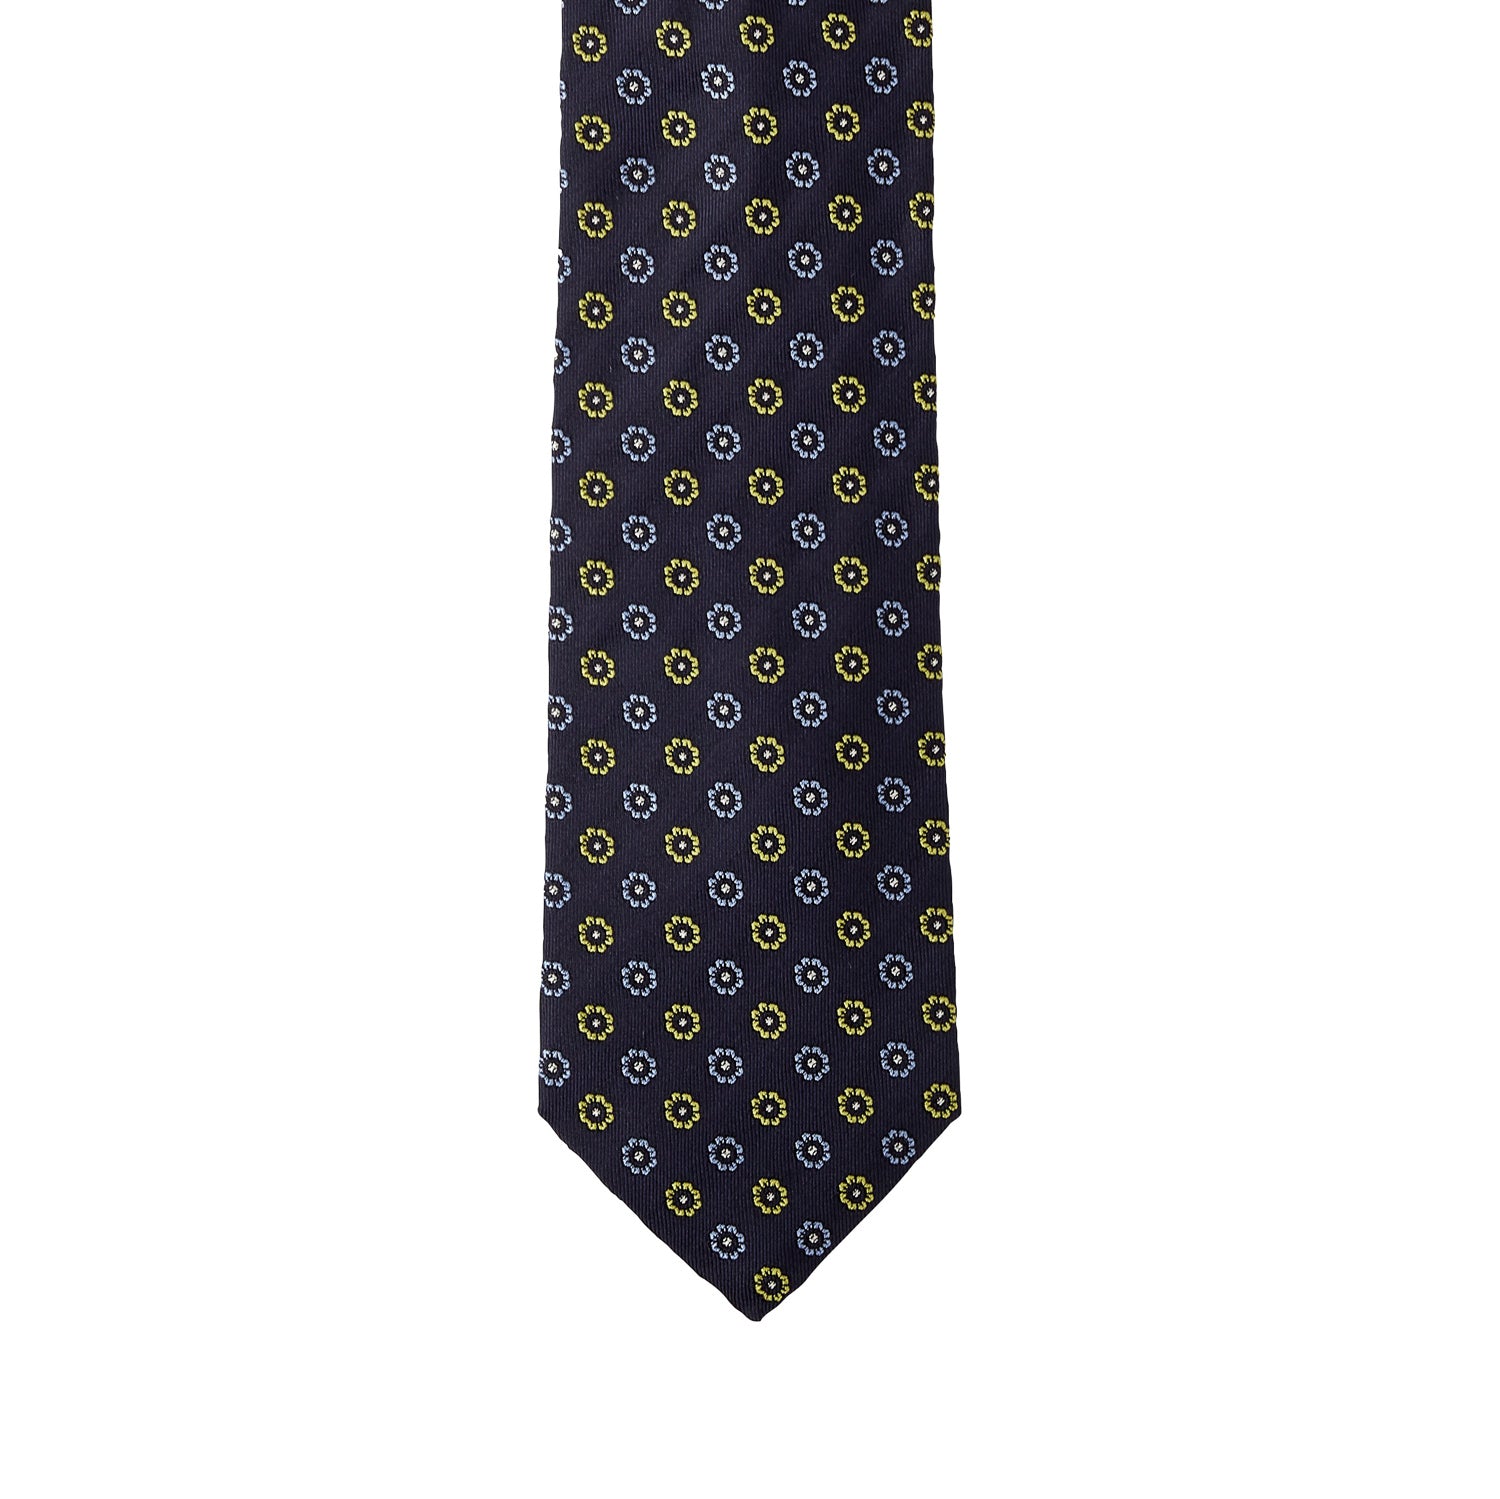 Sovereign Grade Navy Blue and Lime Jacquard Tie | KirbyAllison.com